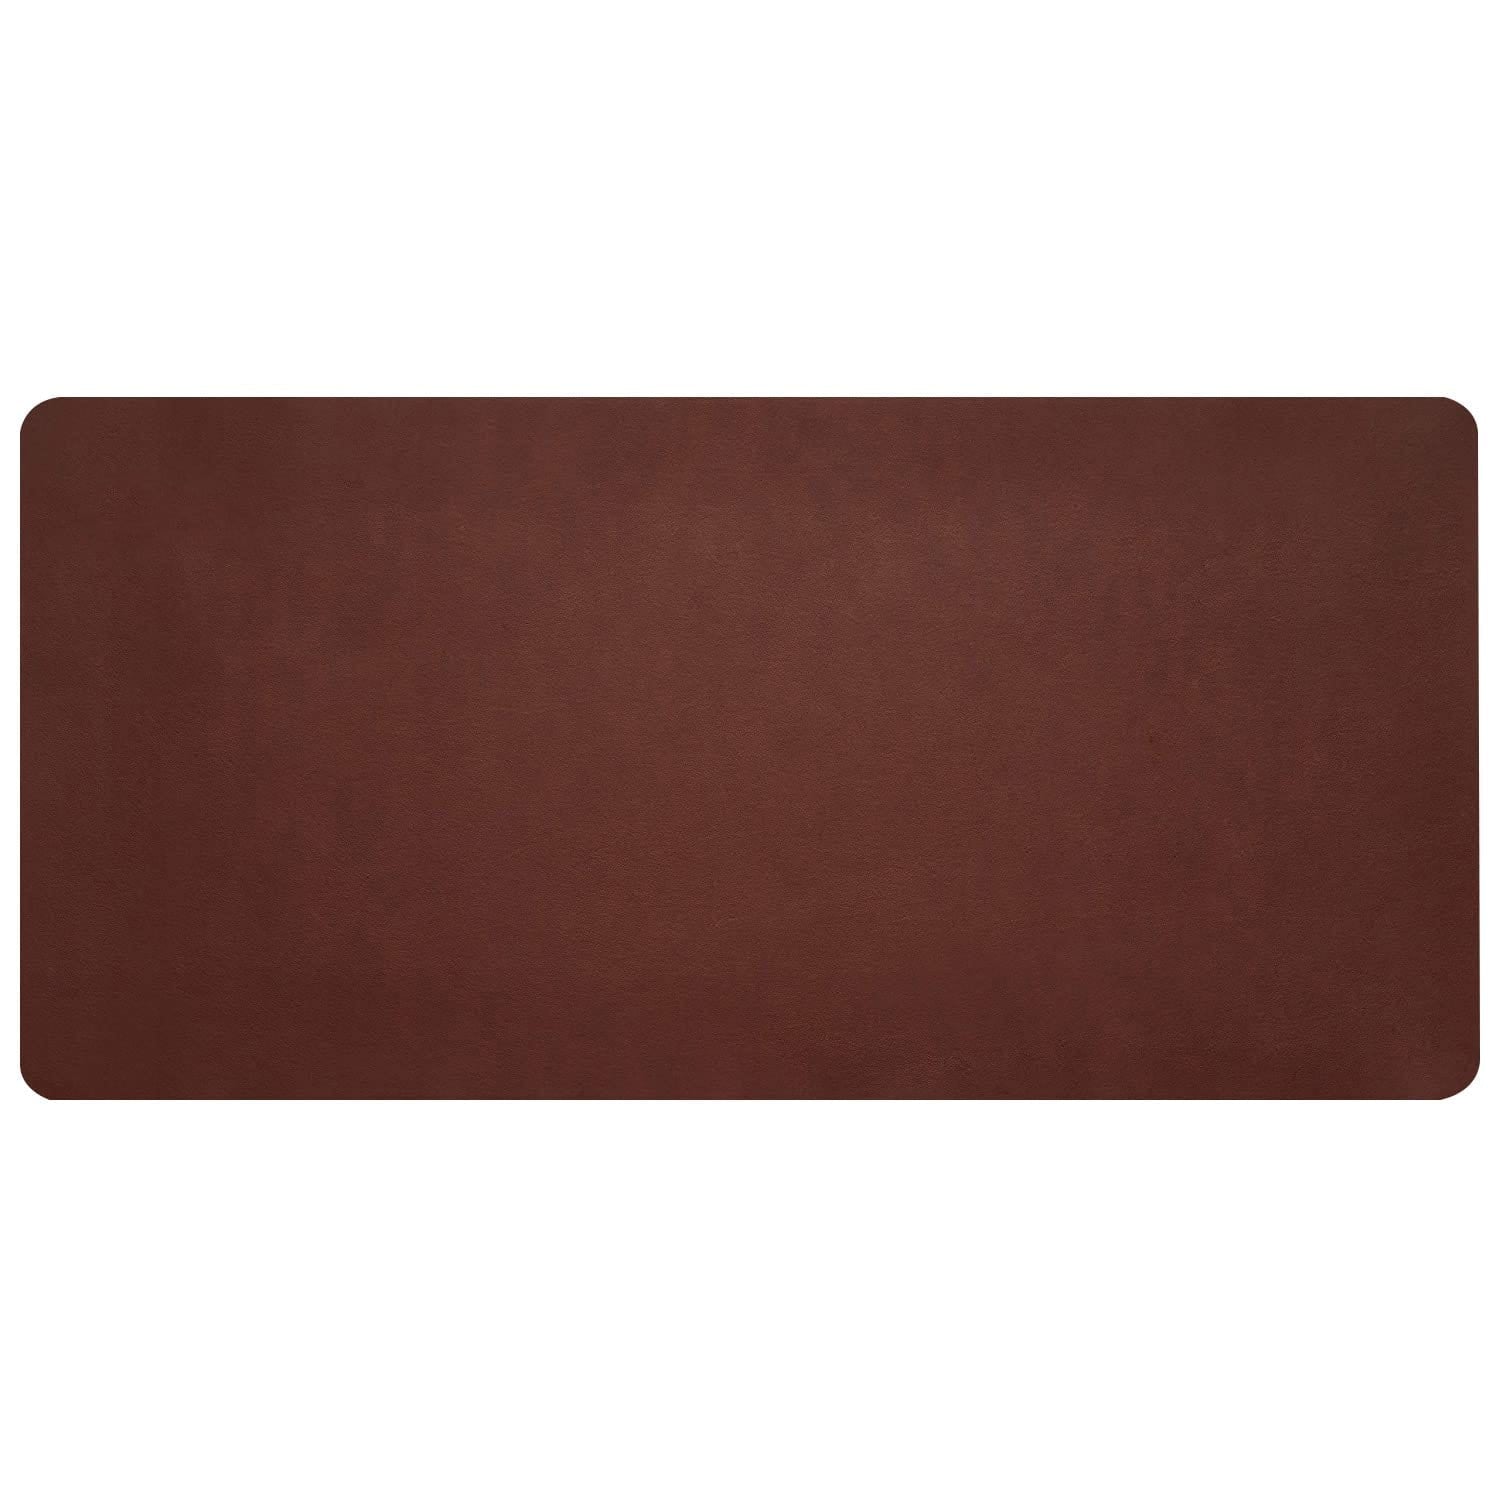 kinnoti Vegan Leather Brown Desk-mat